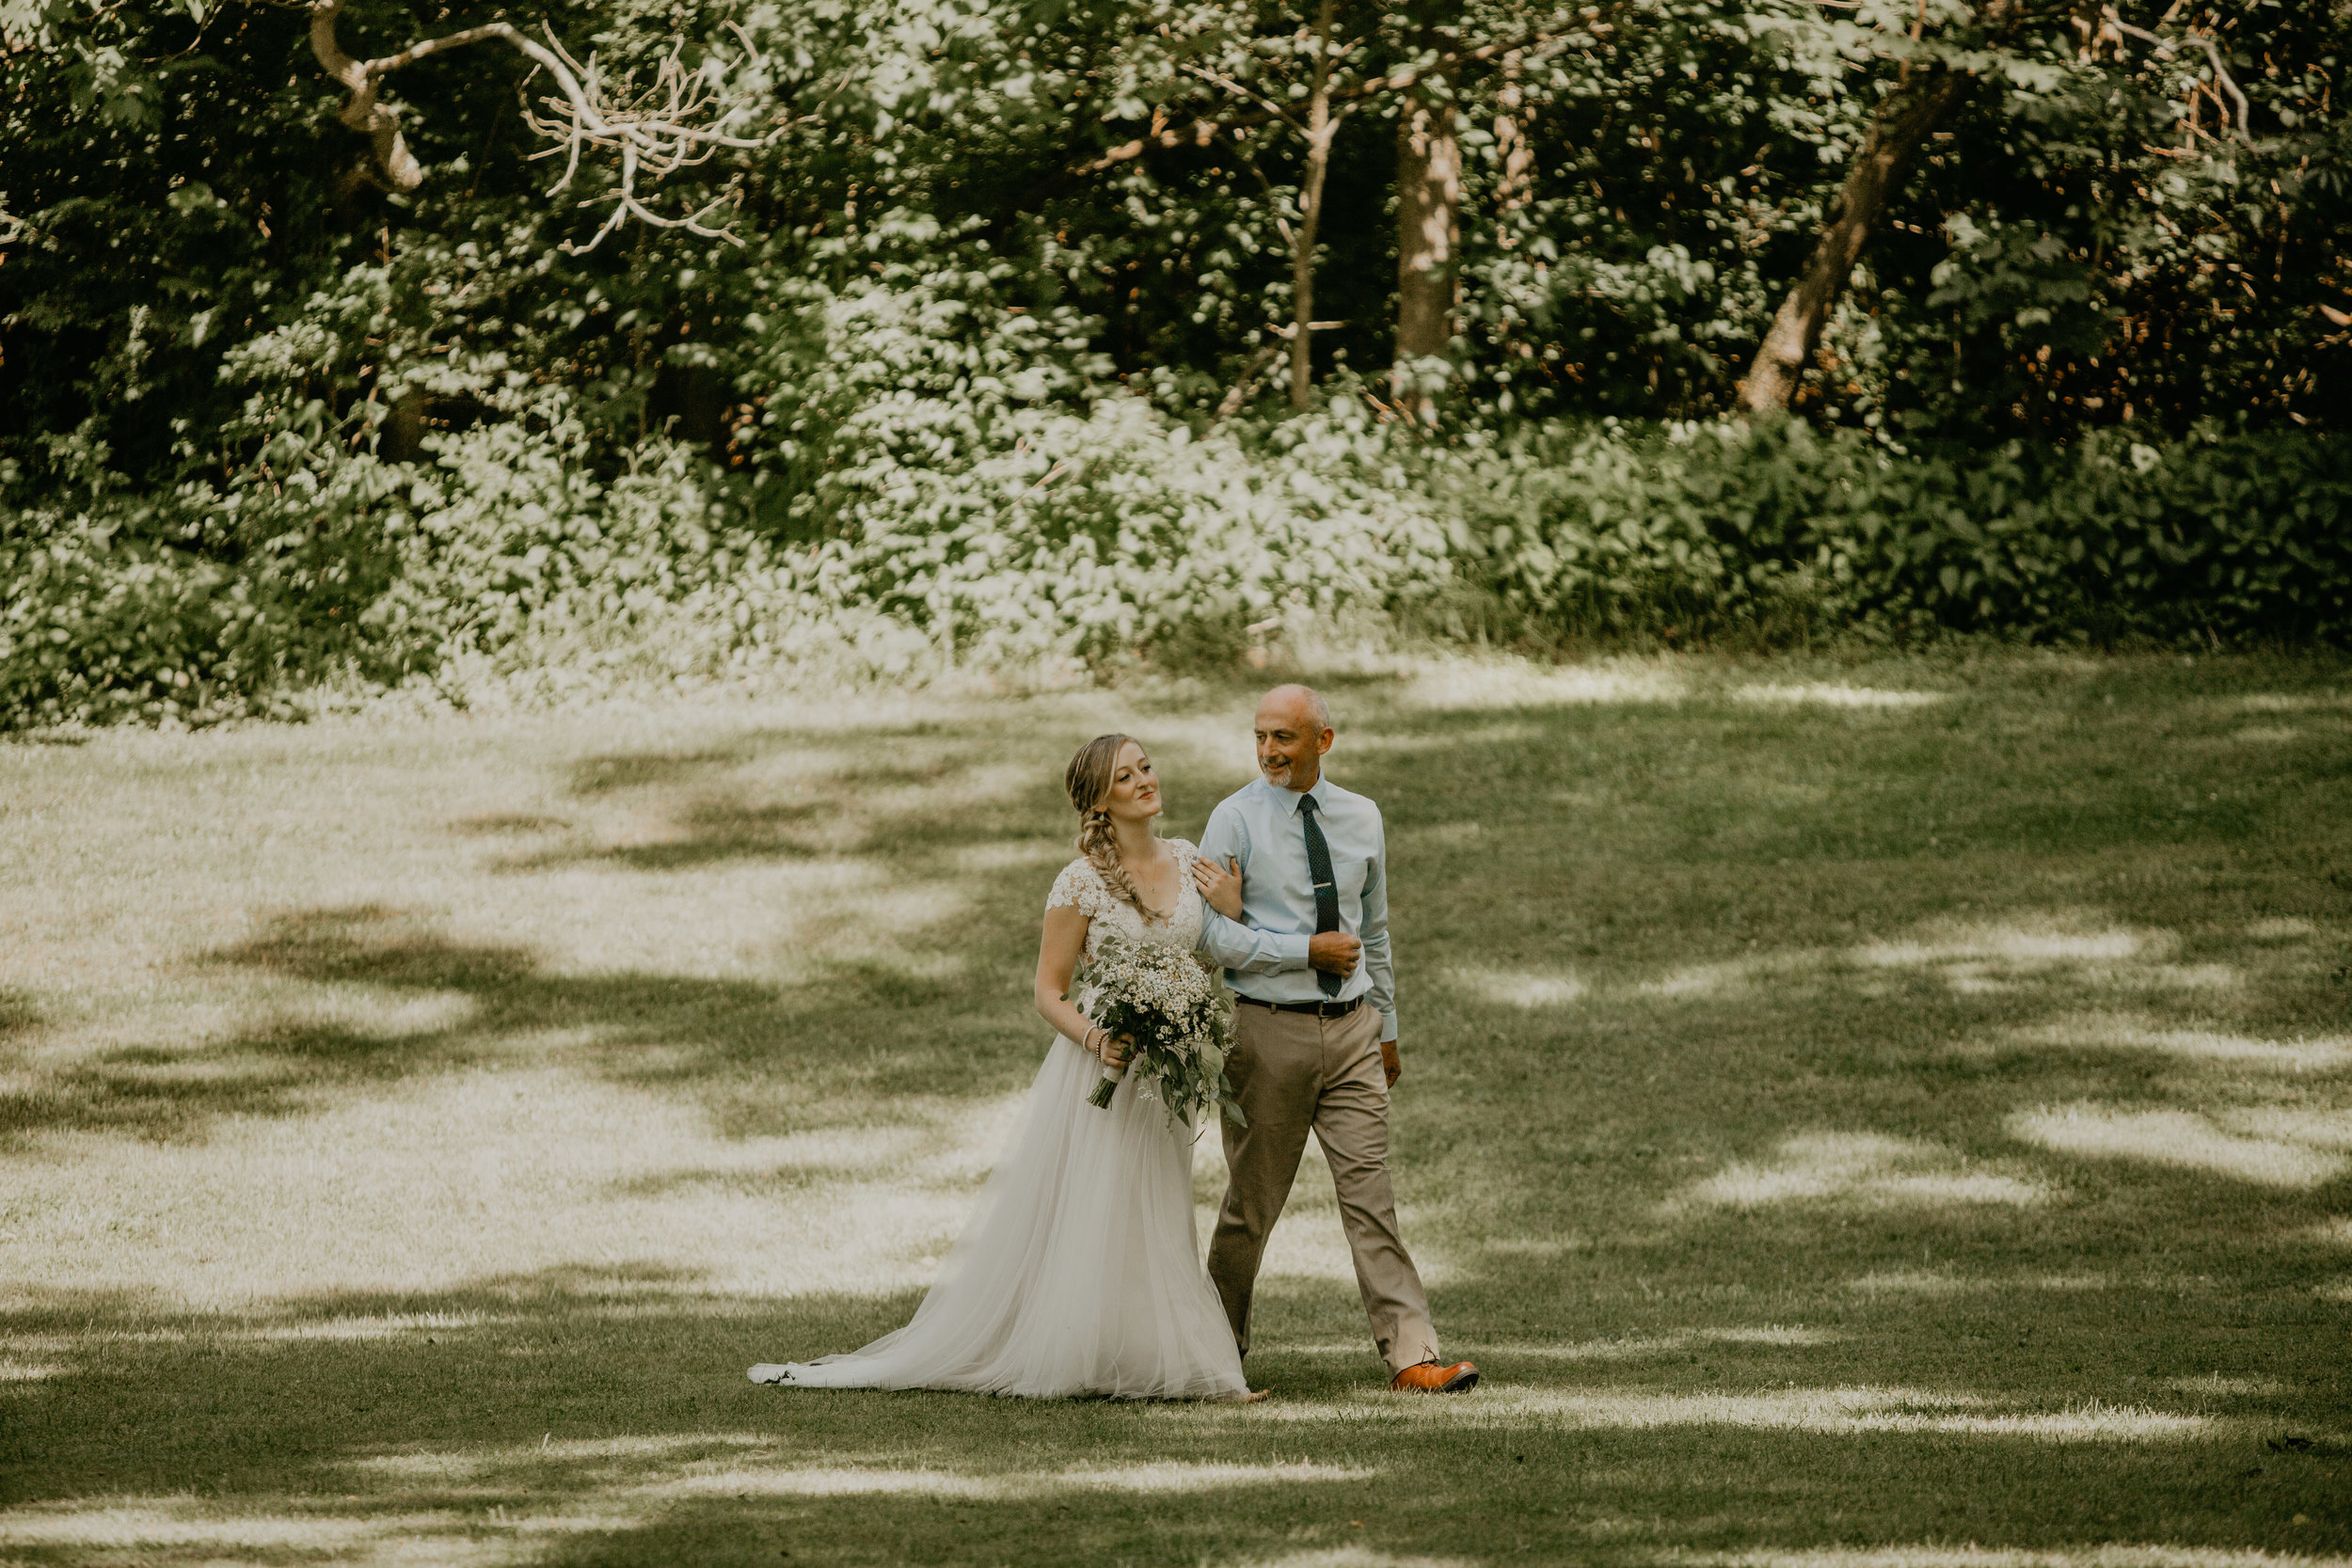 Nicole-Daacke-Photography-pennsylvania-laid-back-outside-backyard-wedding-family-summer-june-maryland-barefoot-bride-woodland-trees-sunset-couple-36.jpg